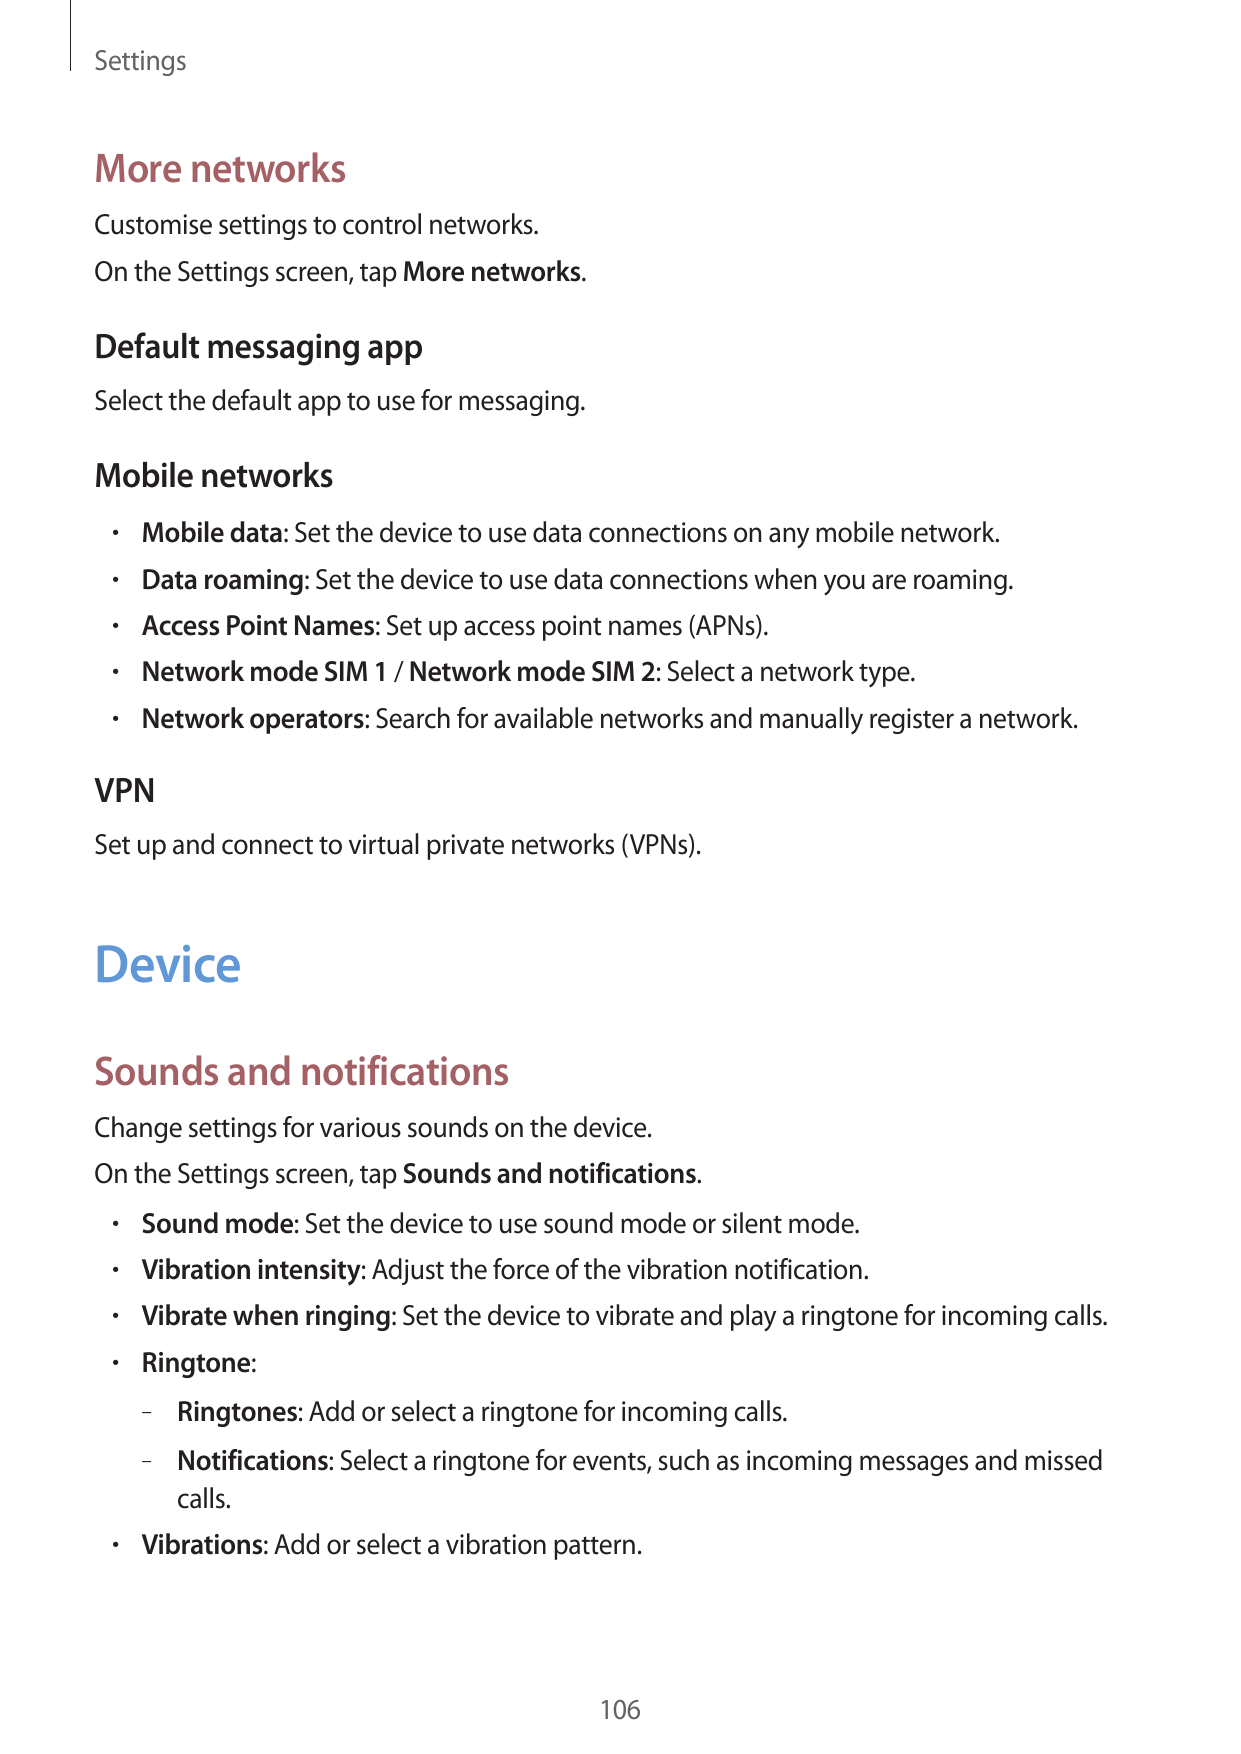 SettingsMore networksCustomise settings to control networks.On the Settings screen, tap More networks.Default messaging appSelec